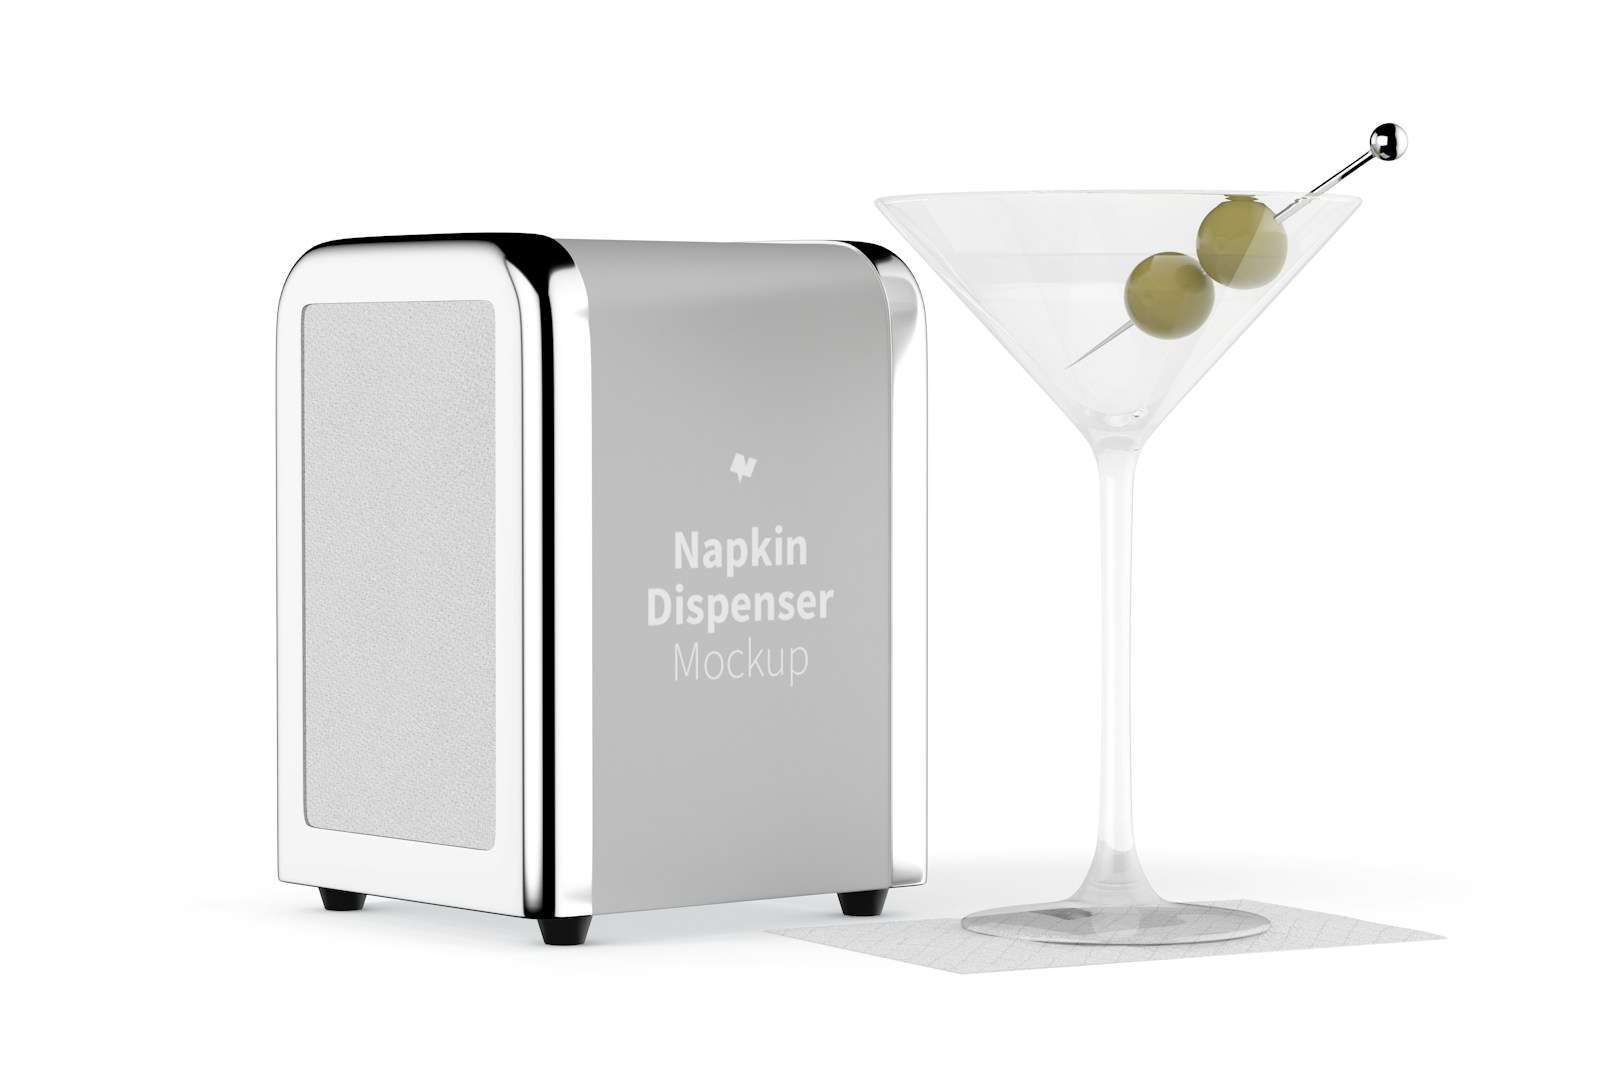 Napkin Dispenser Mockup, Perspective View